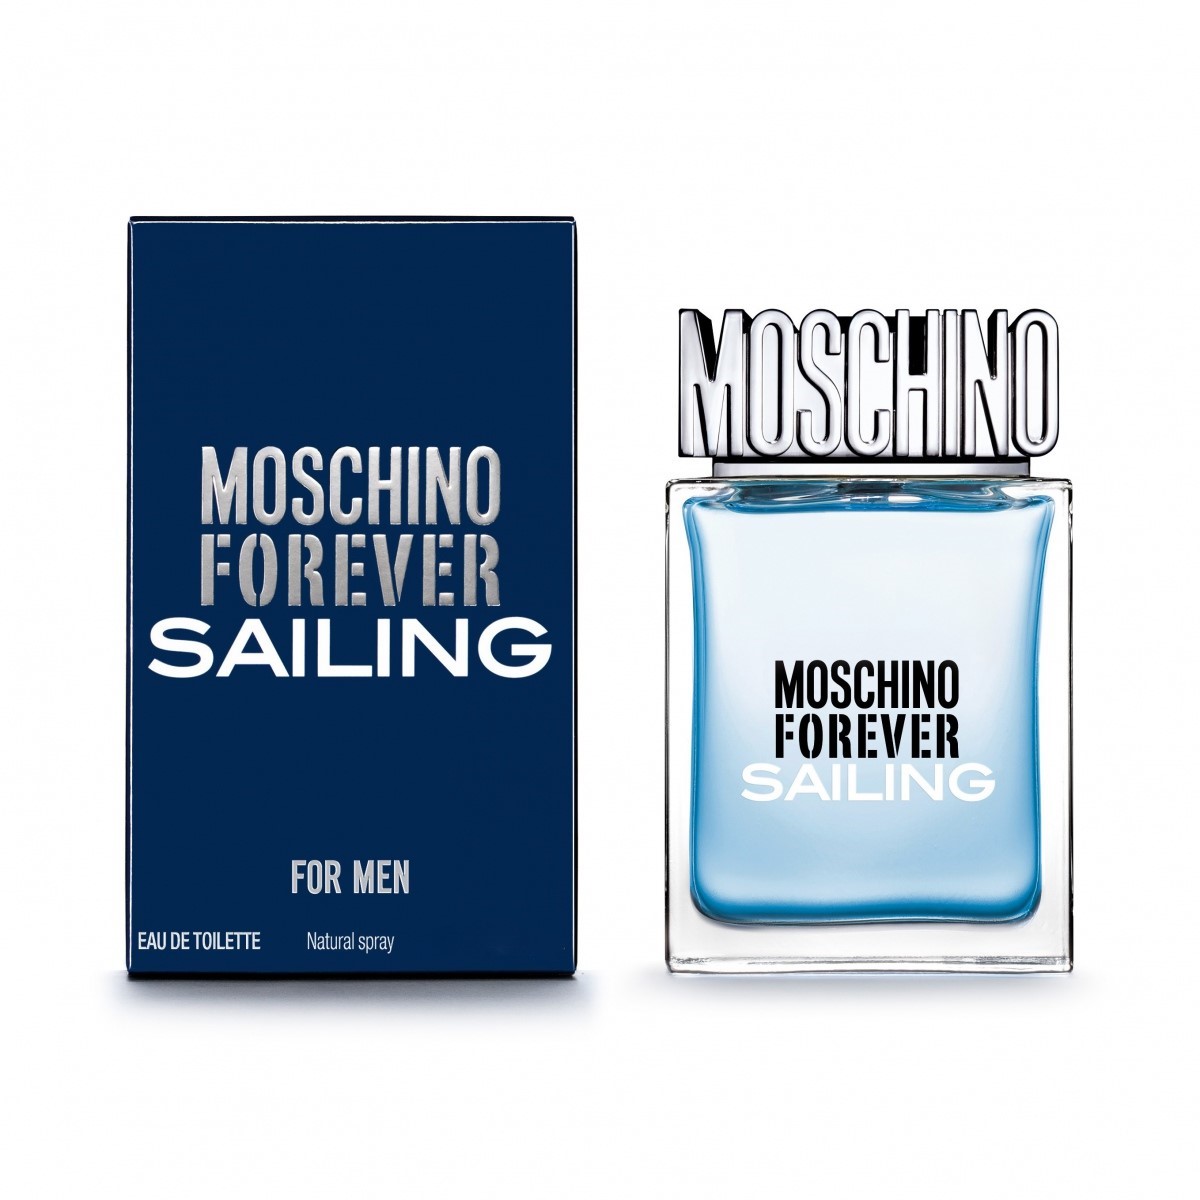 MOSCHINO FOREVER SAILING FOR MEN